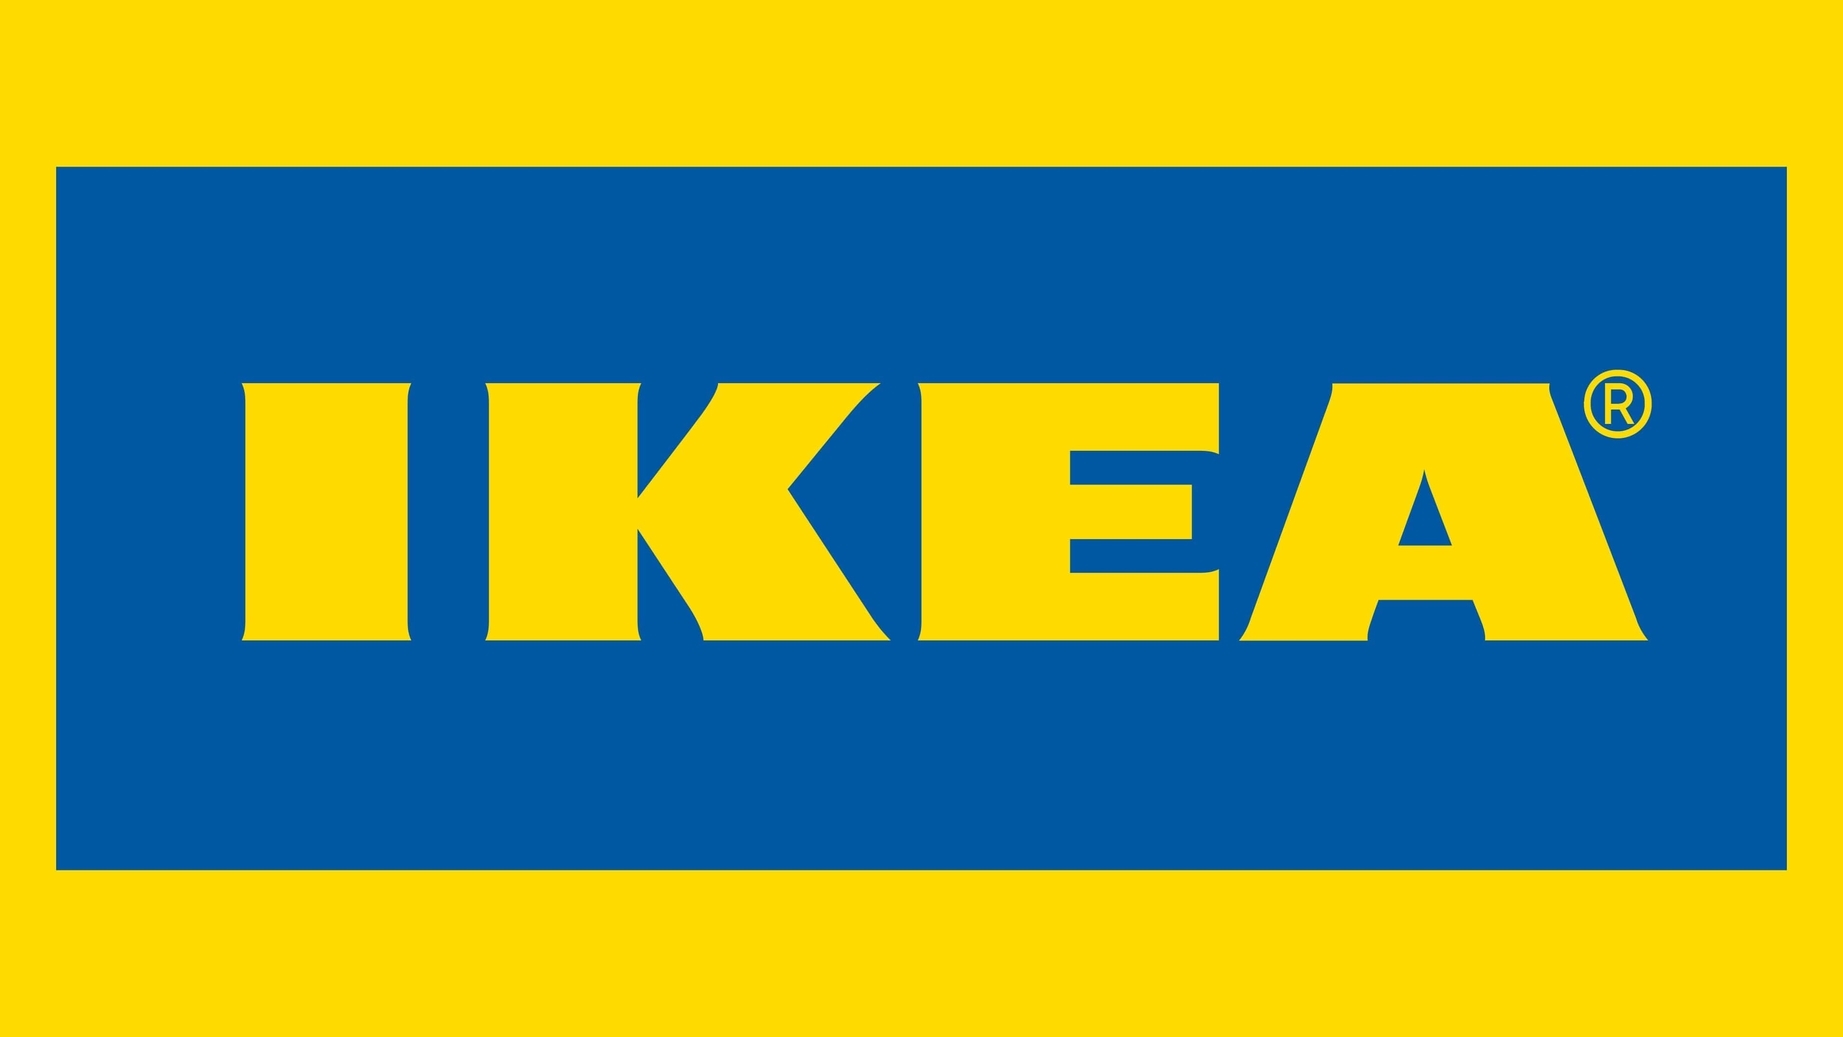 Ikea symbol